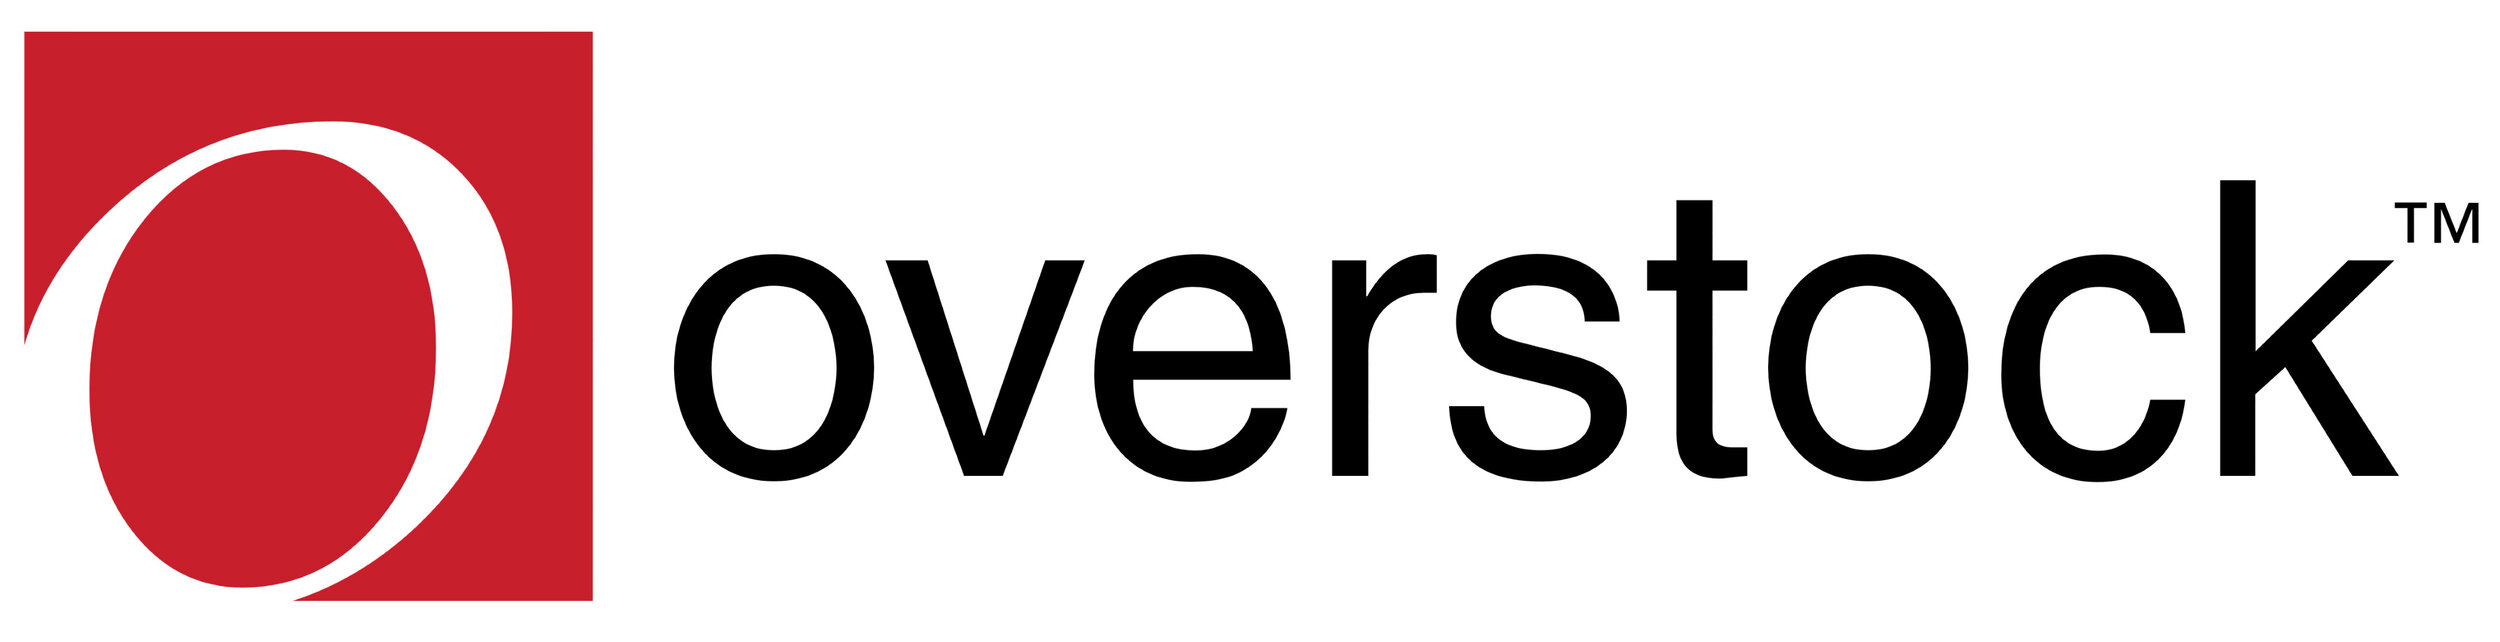 Overstock_logo_wordmark.jpg